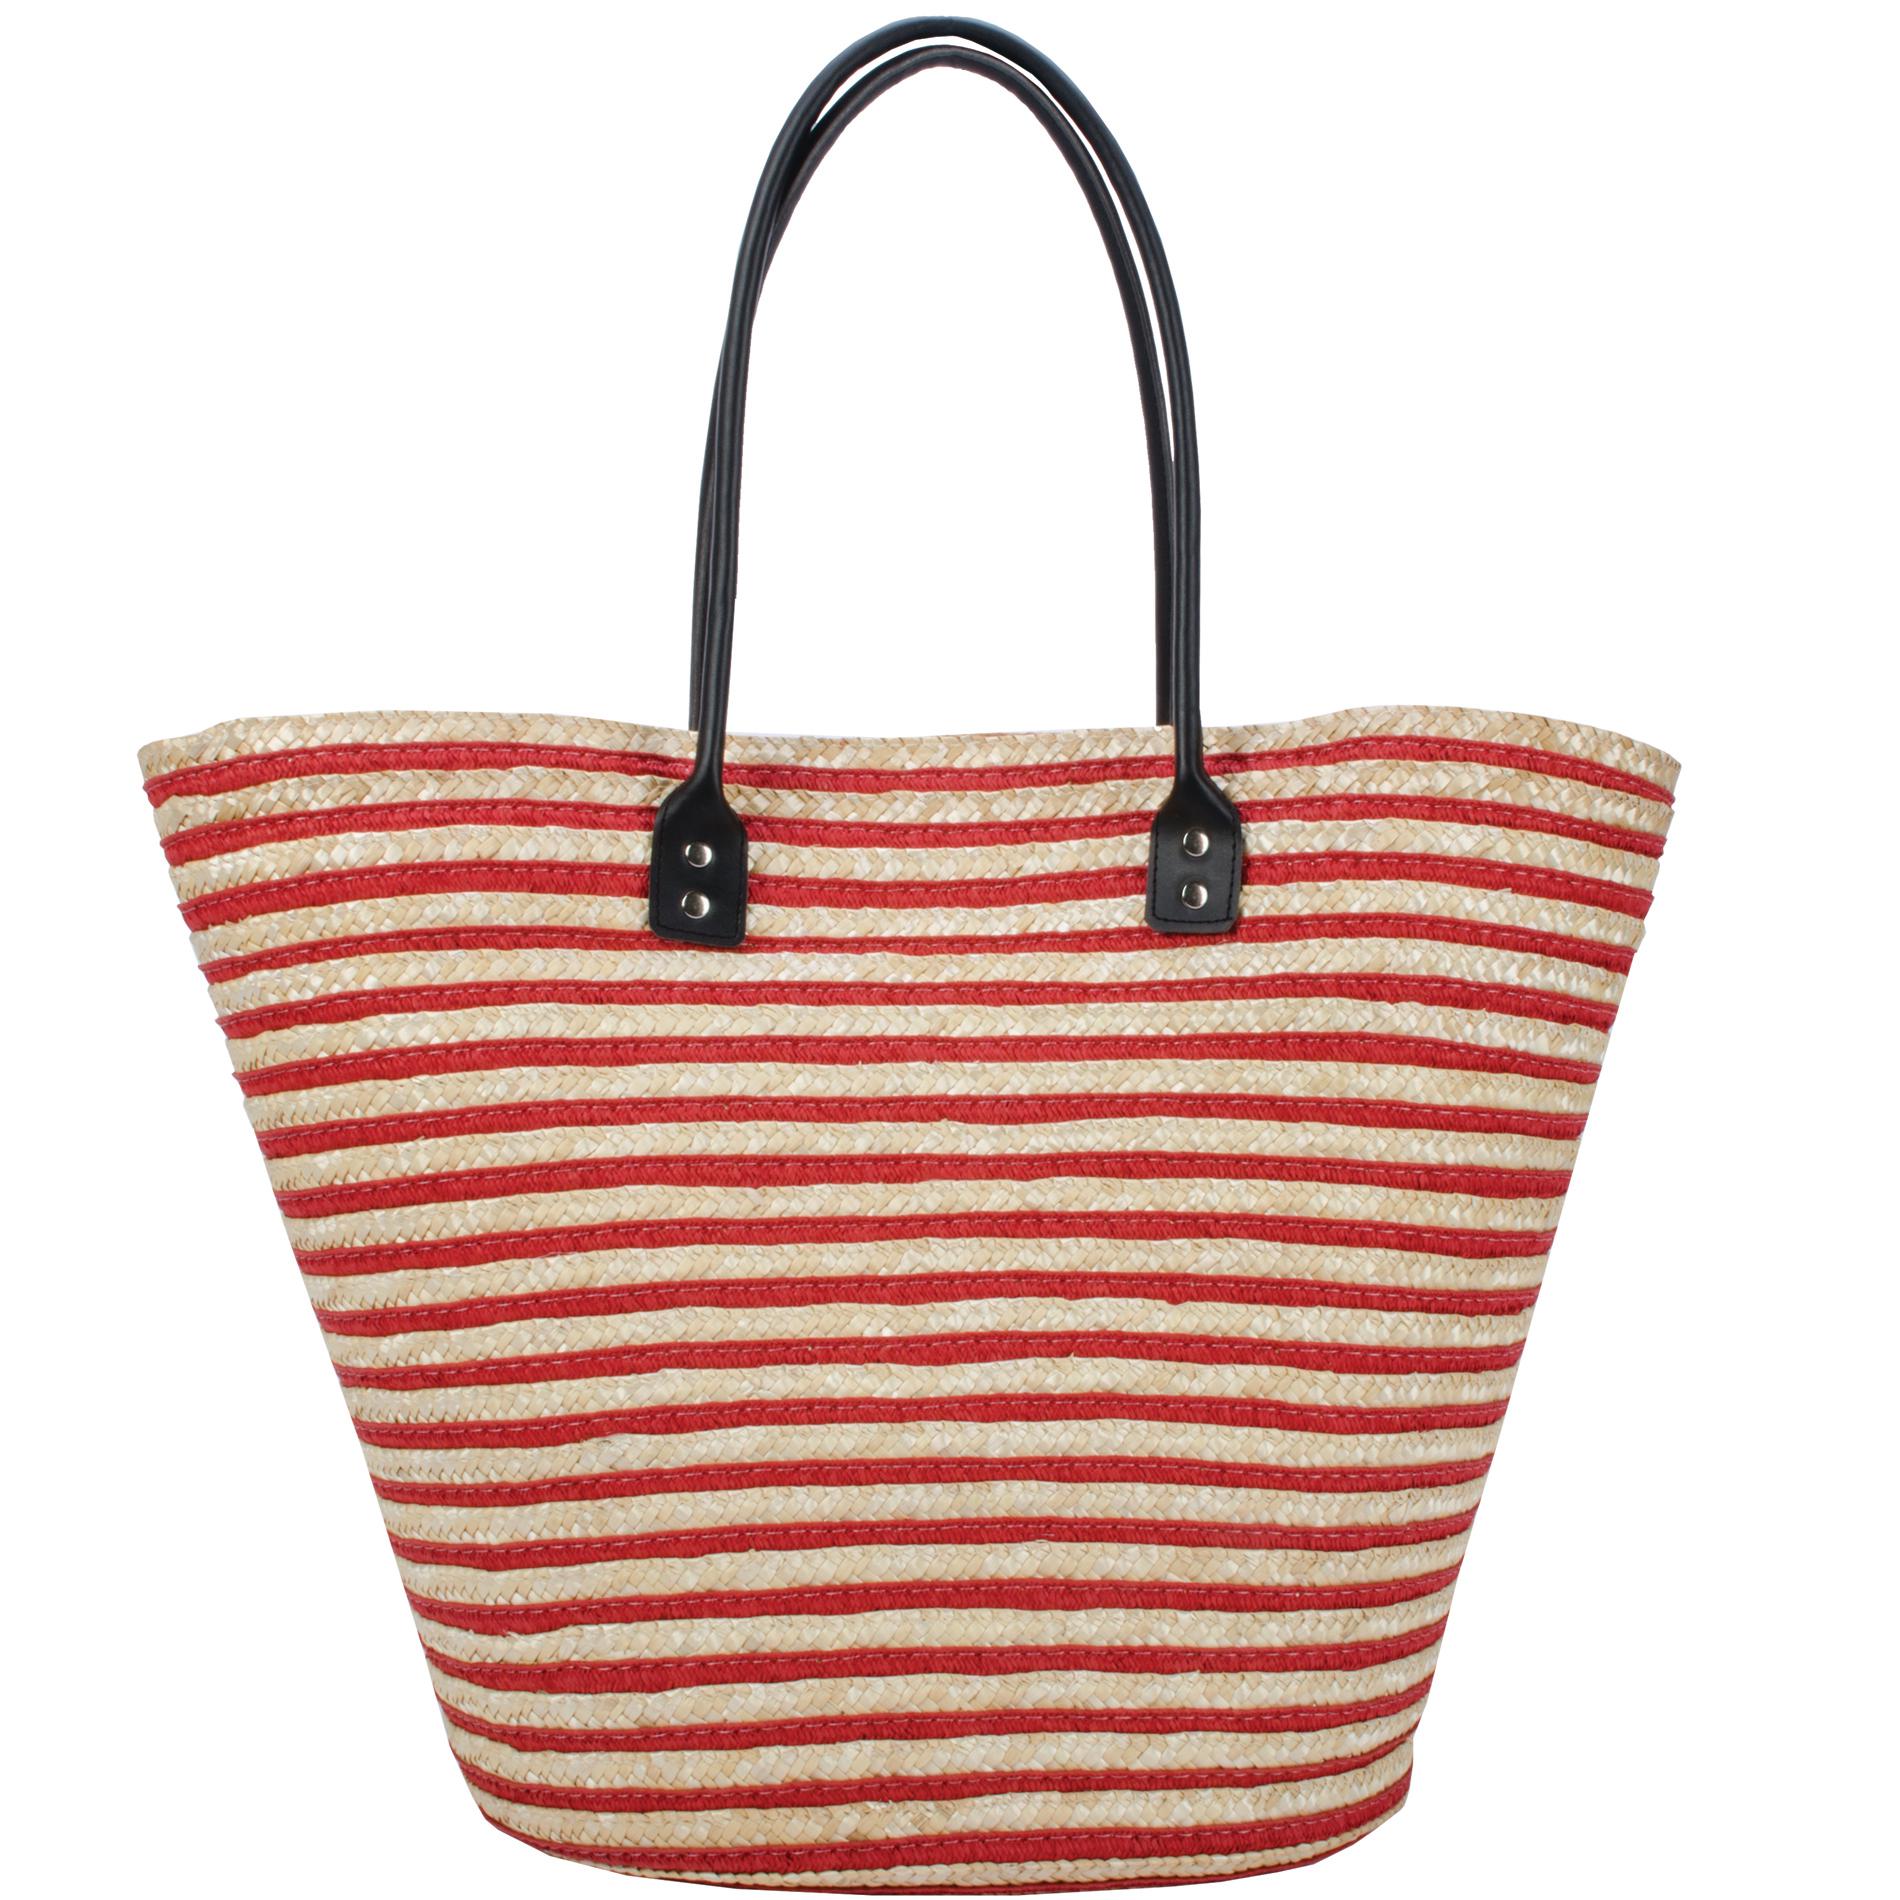 Women's Straw Tote Bag - Striped